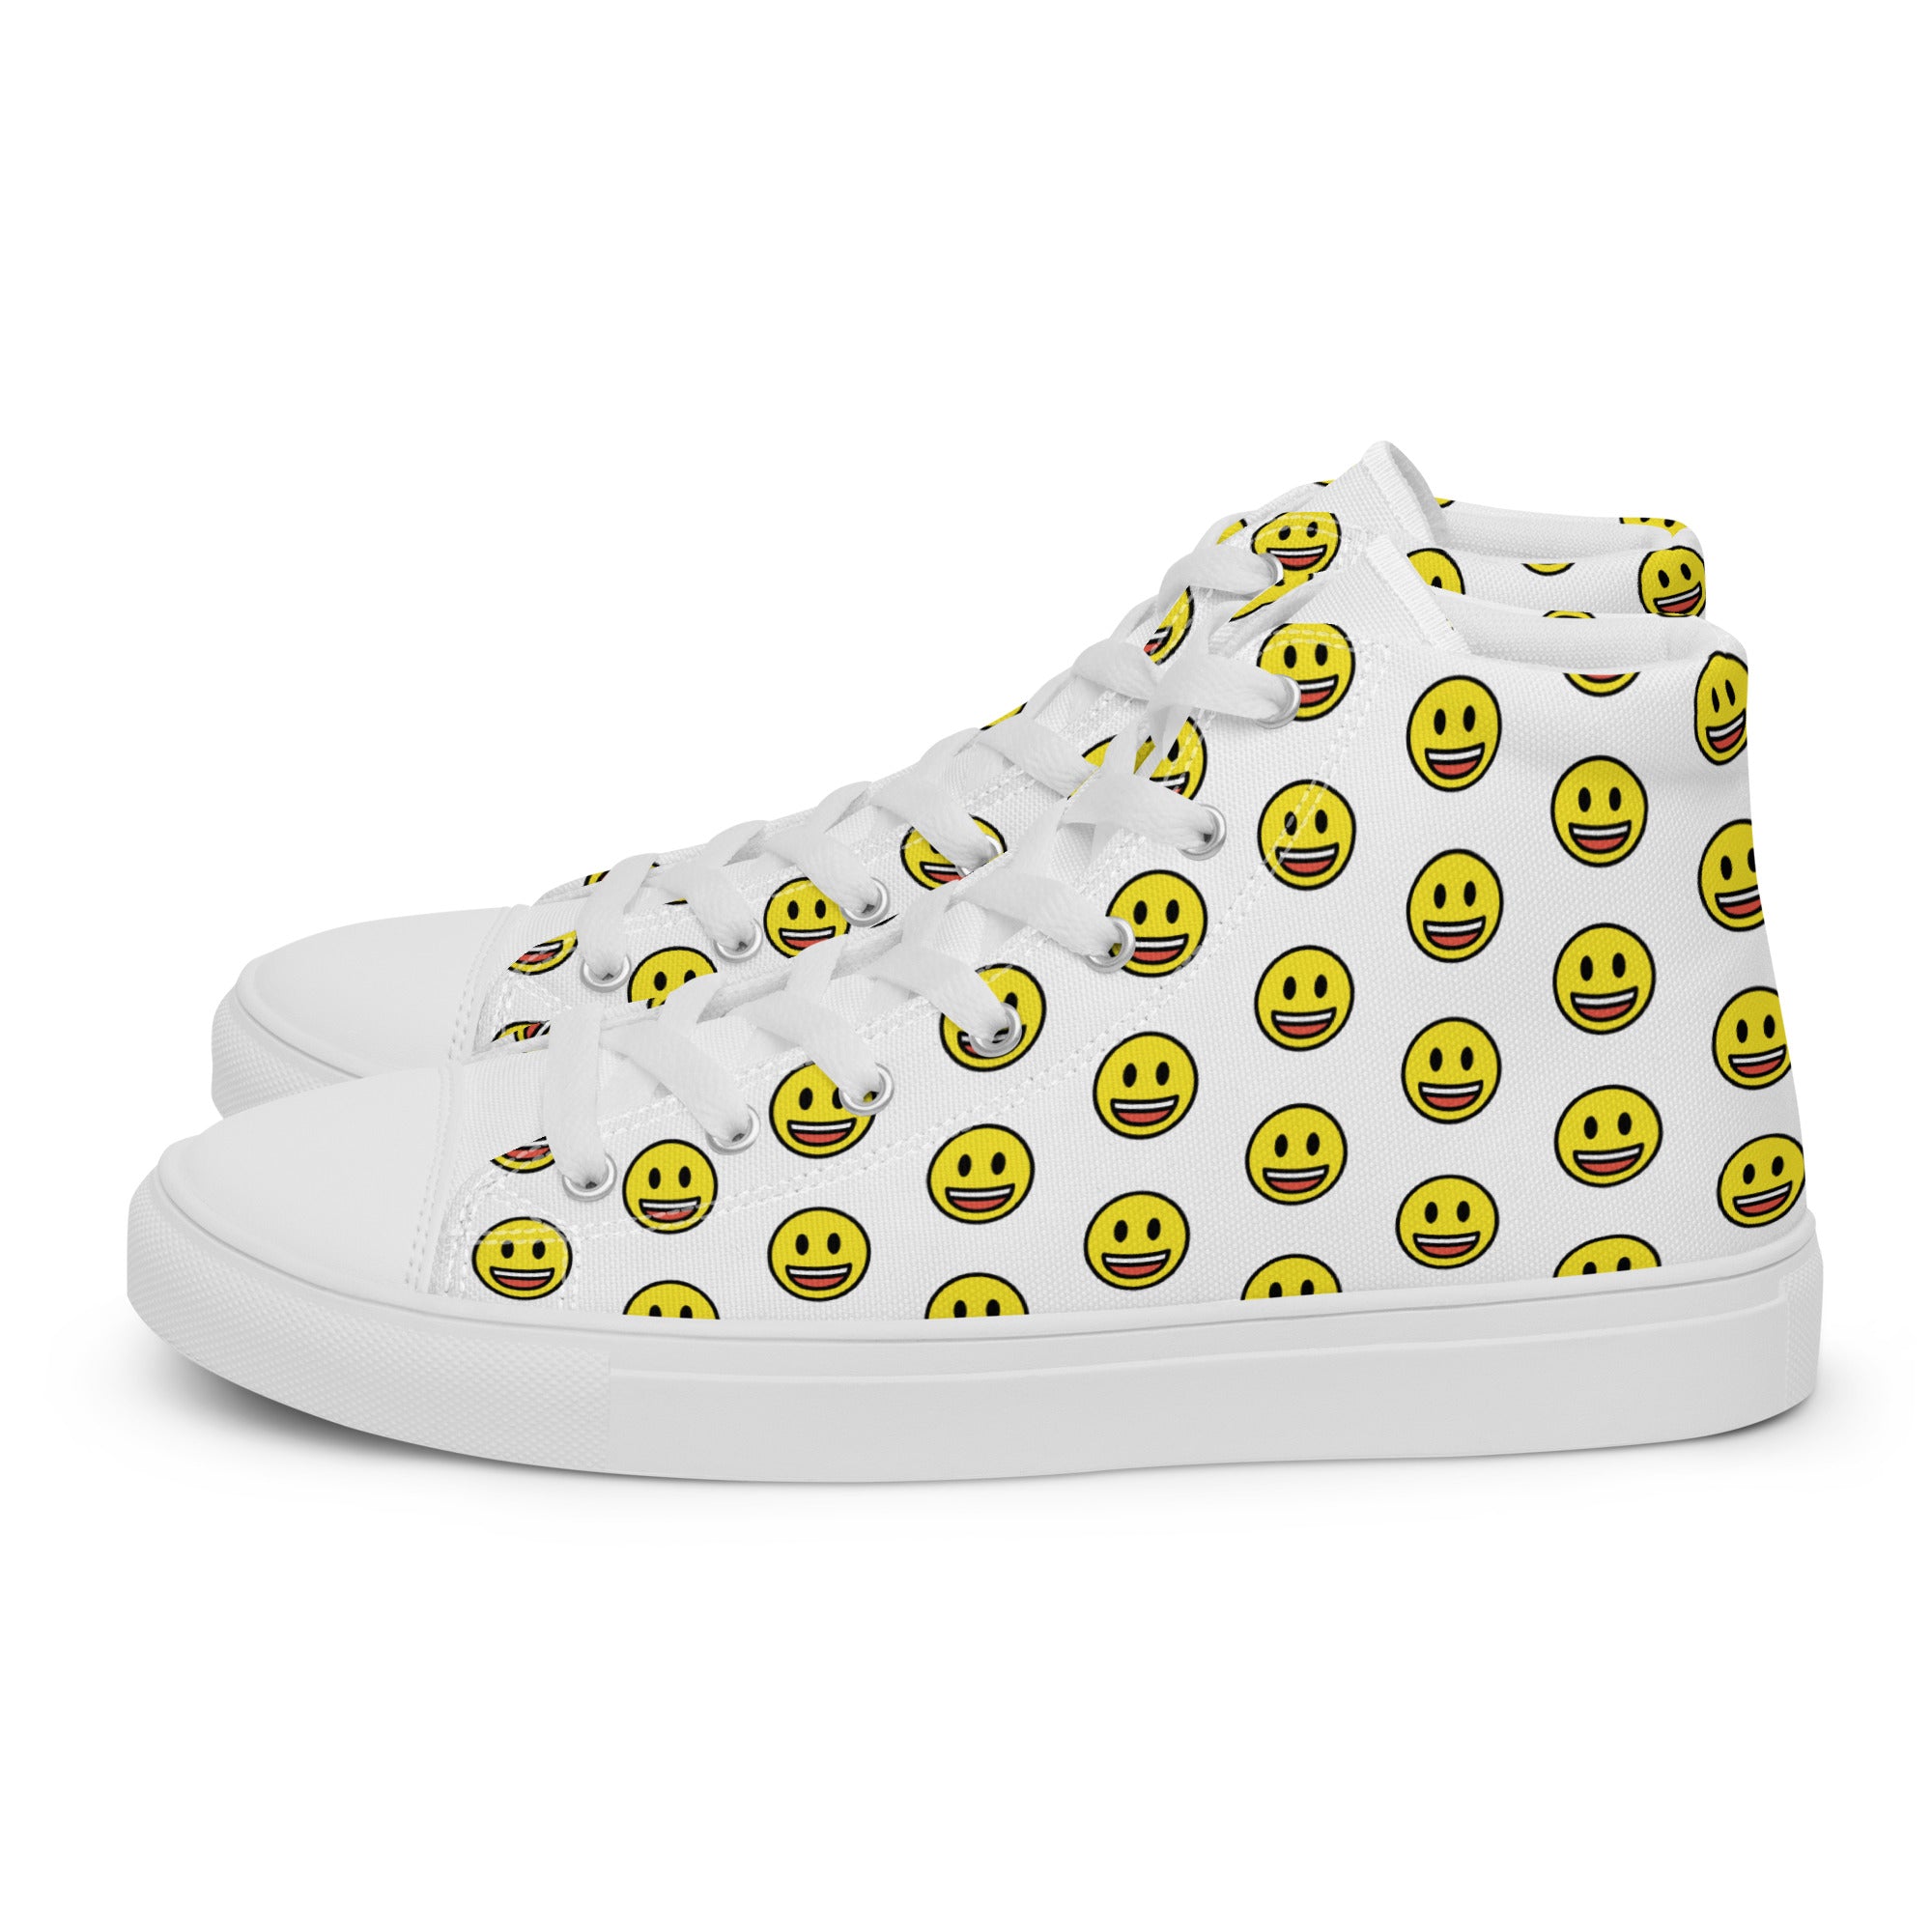 Chitelli's Happy Face Emoji Women's High Top Sneakers